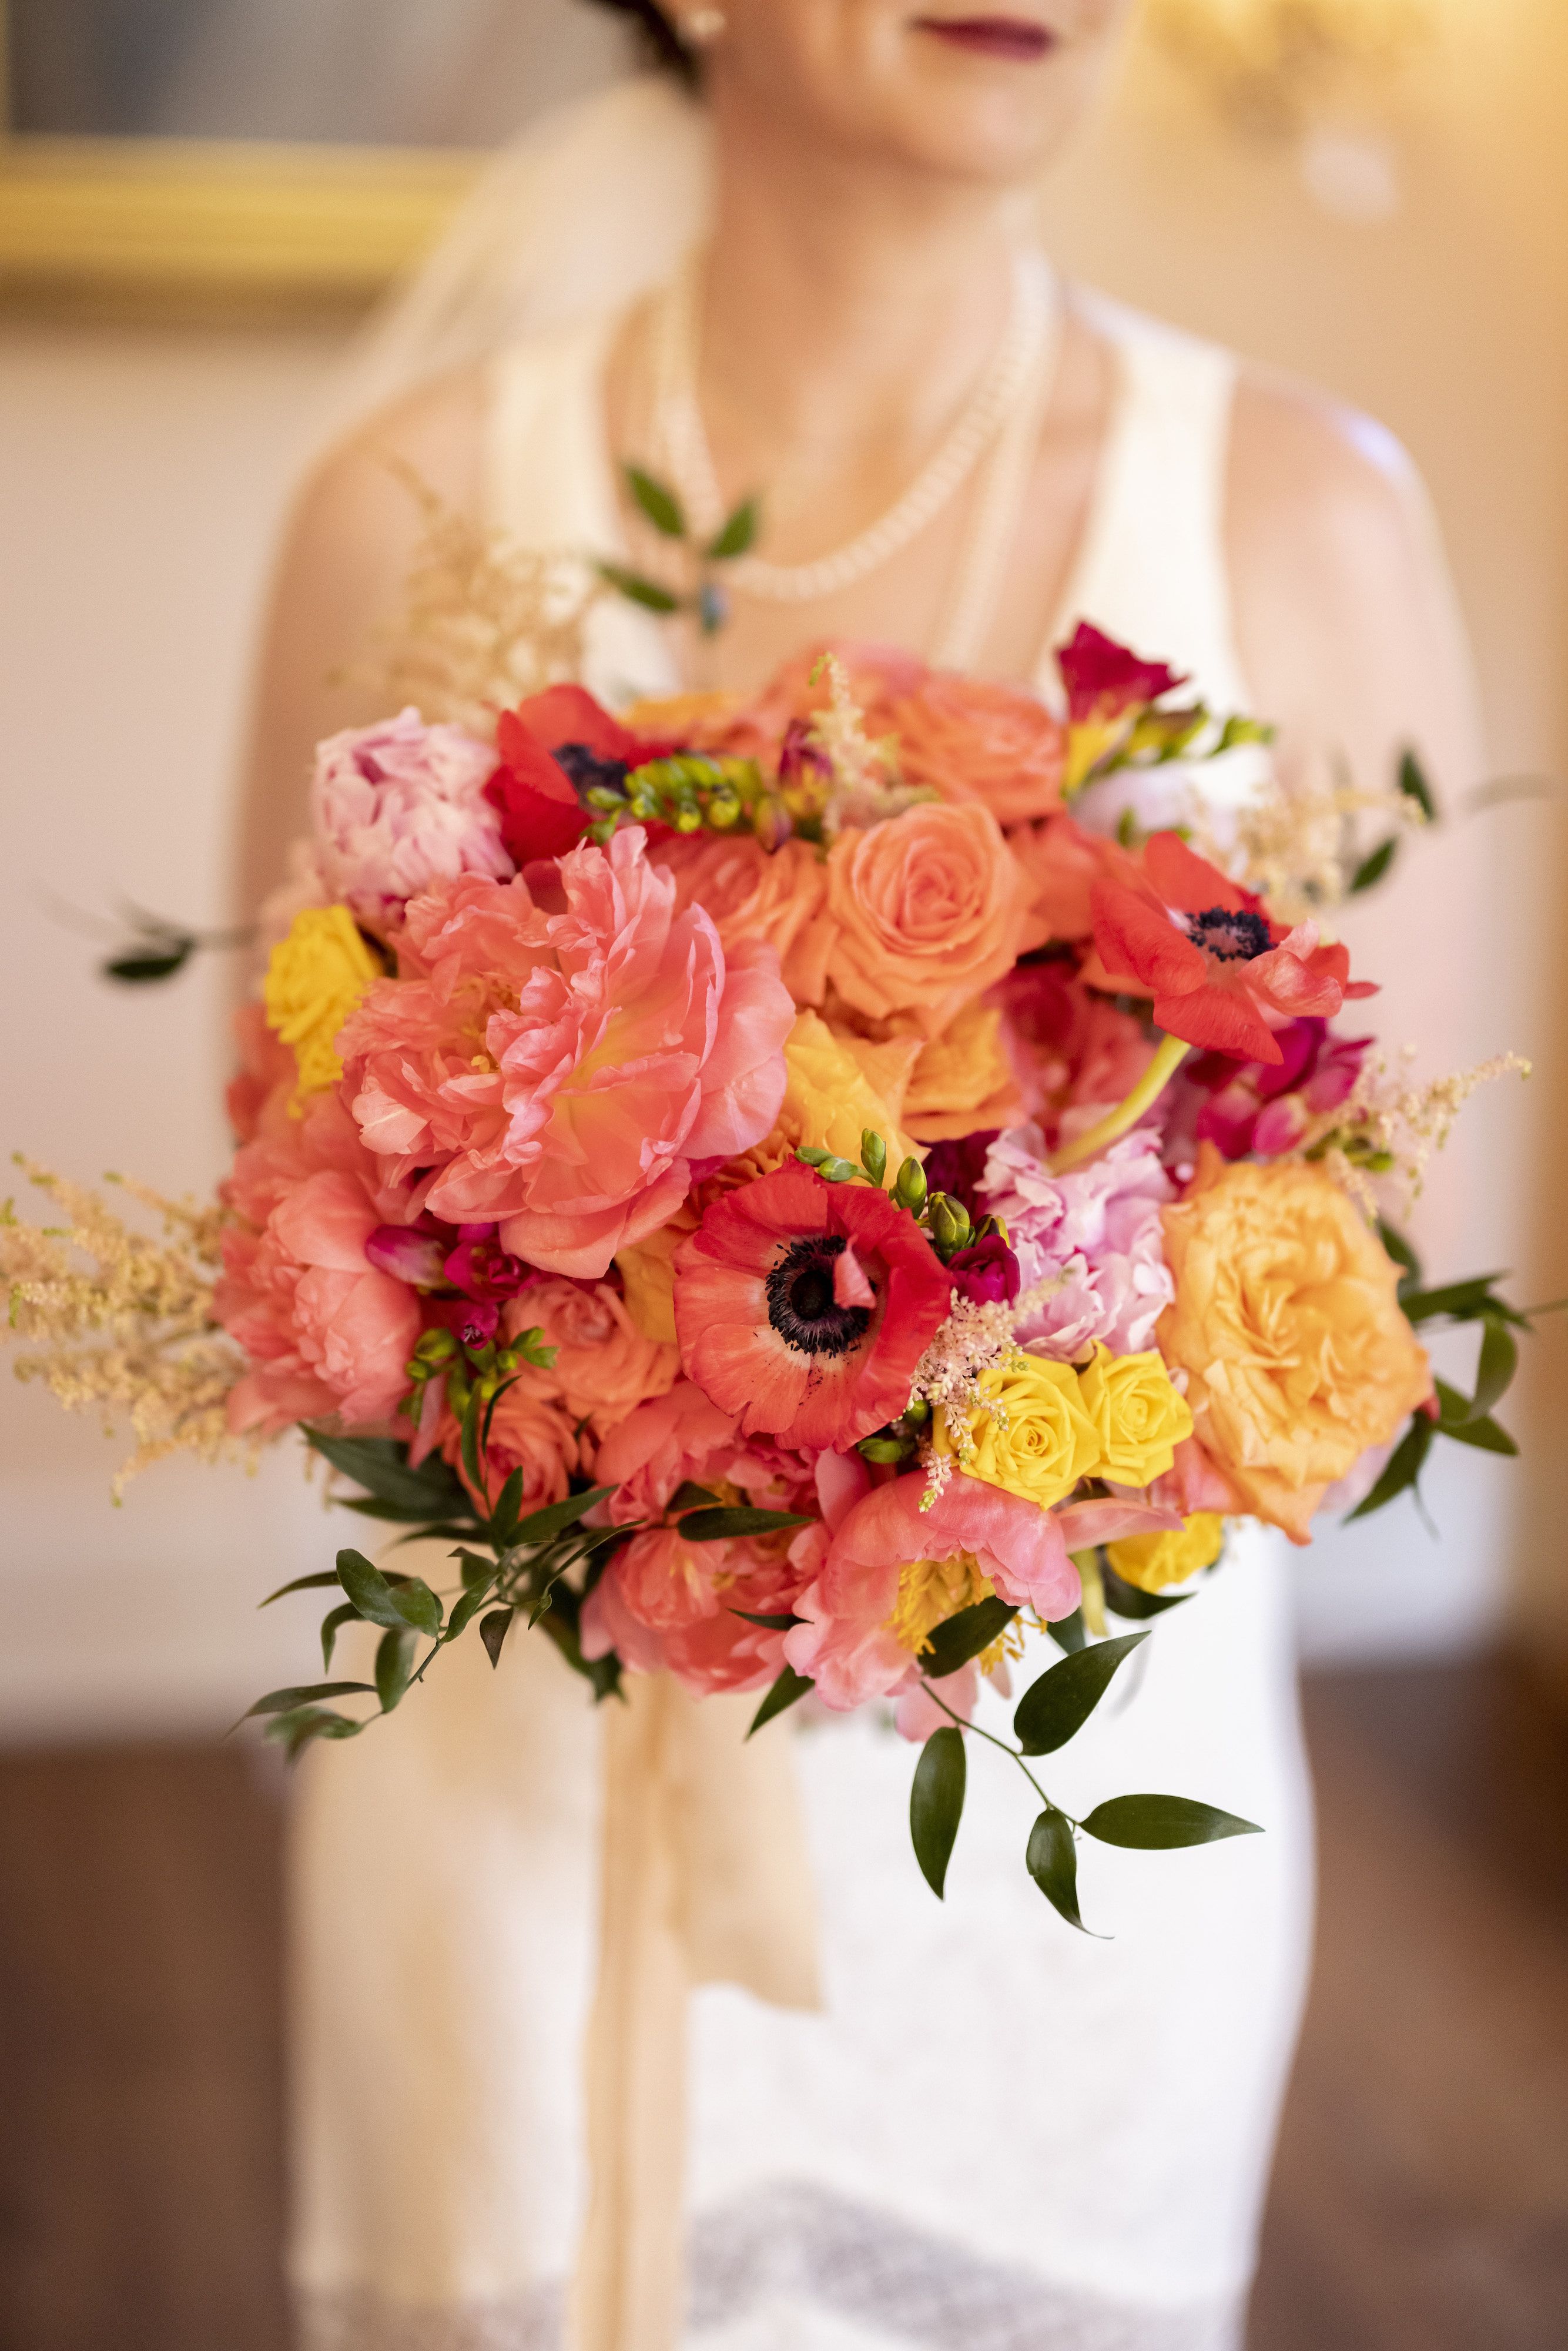 Coral Rose Buds Wedding Centerpieces Silk Flowers Bouquet 36 flowers 6 Bushes 